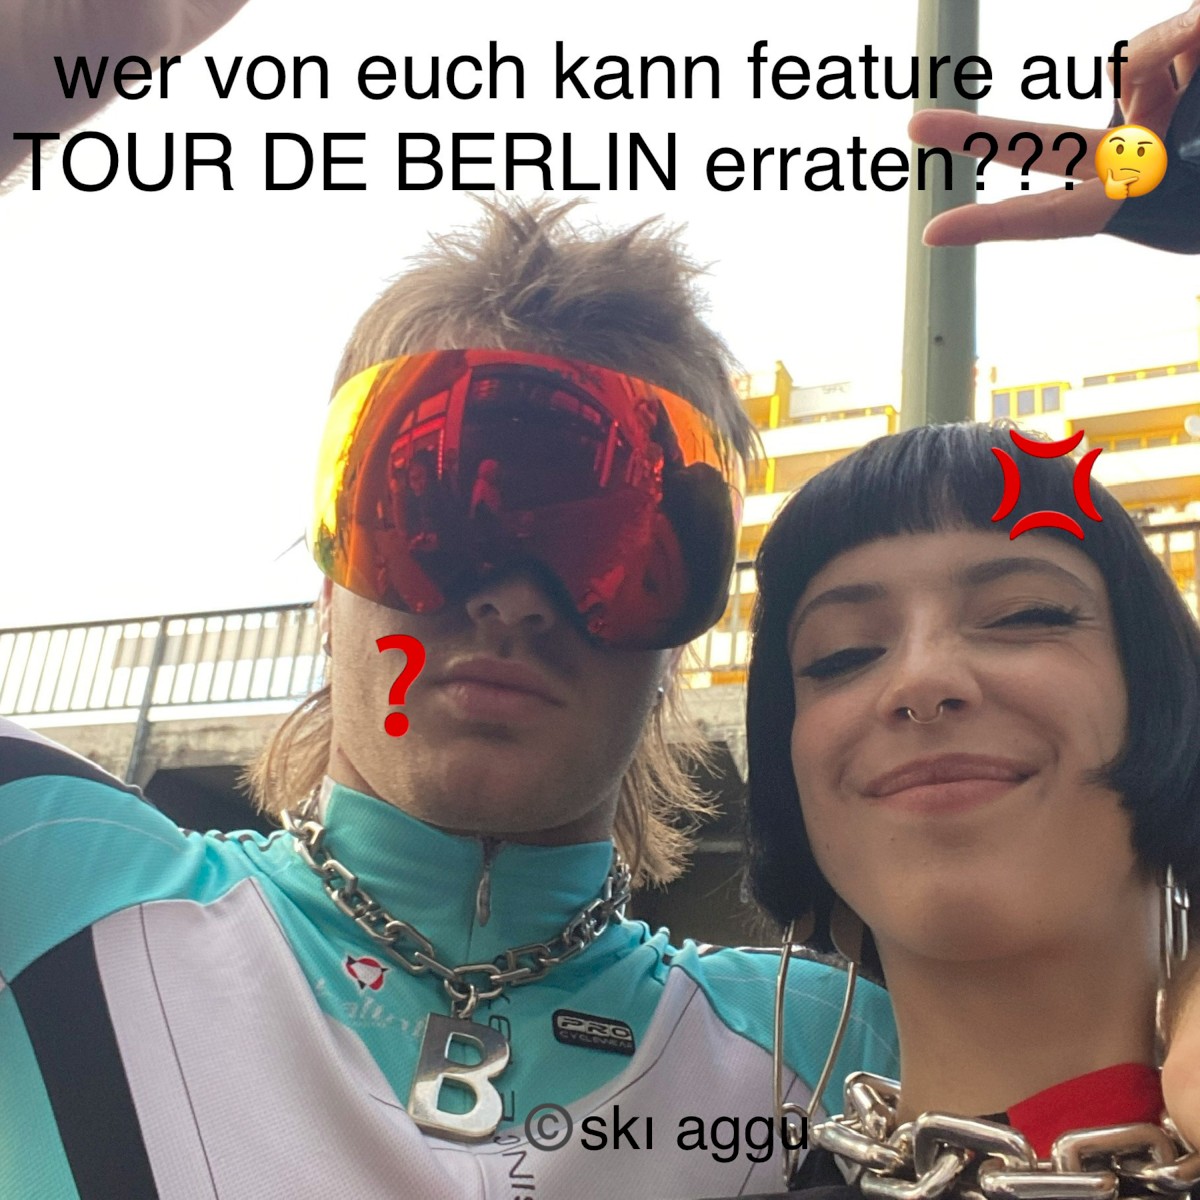 lyrics tour de berlin